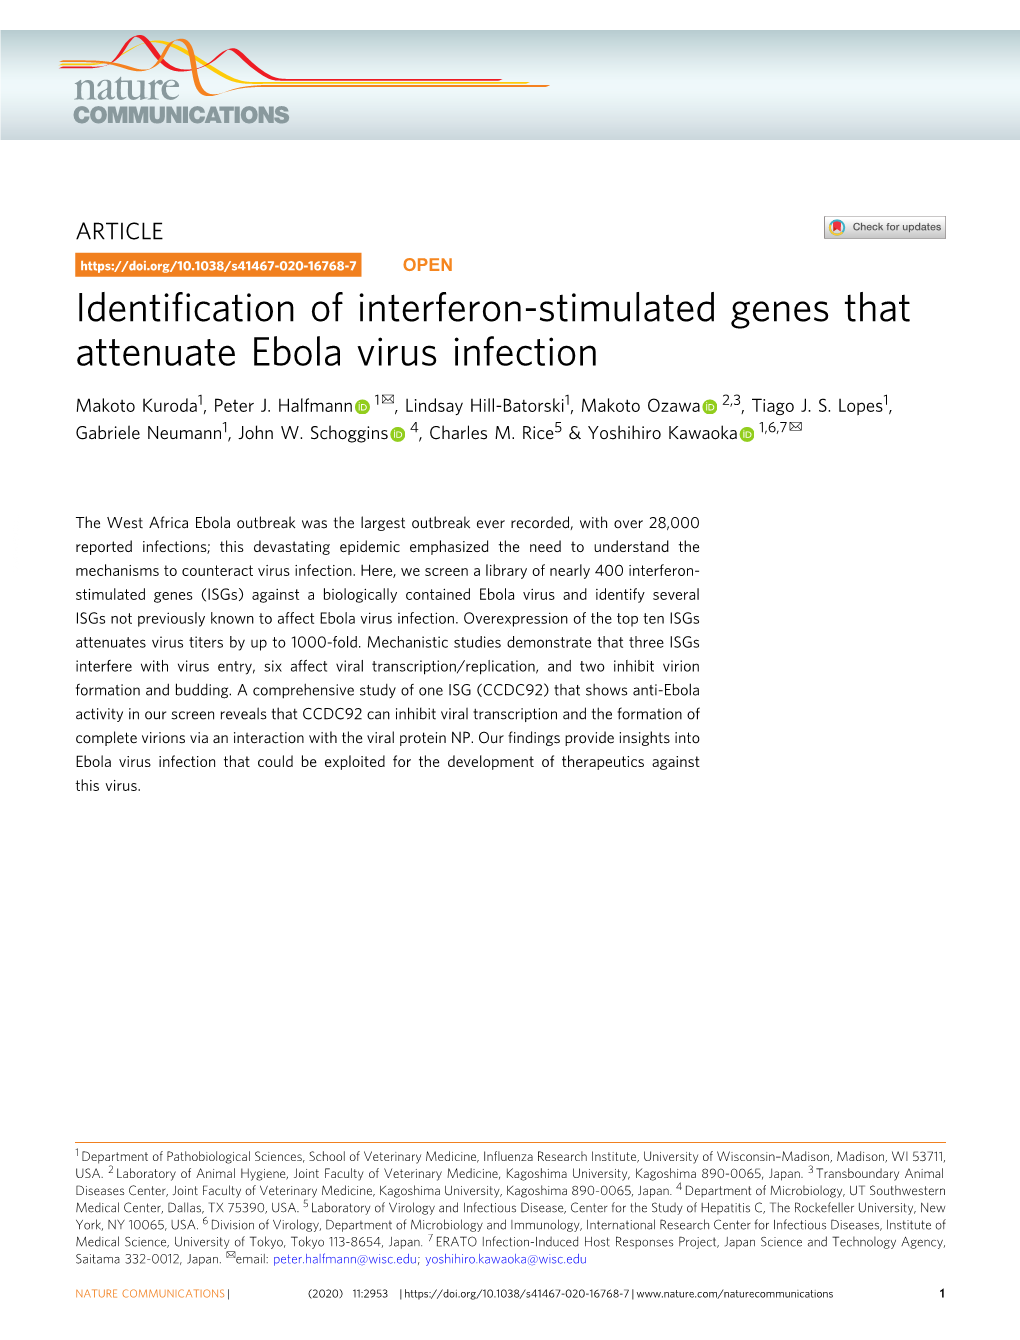 Identification of Interferon-Stimulated Genes That Attenuate Ebola Virus